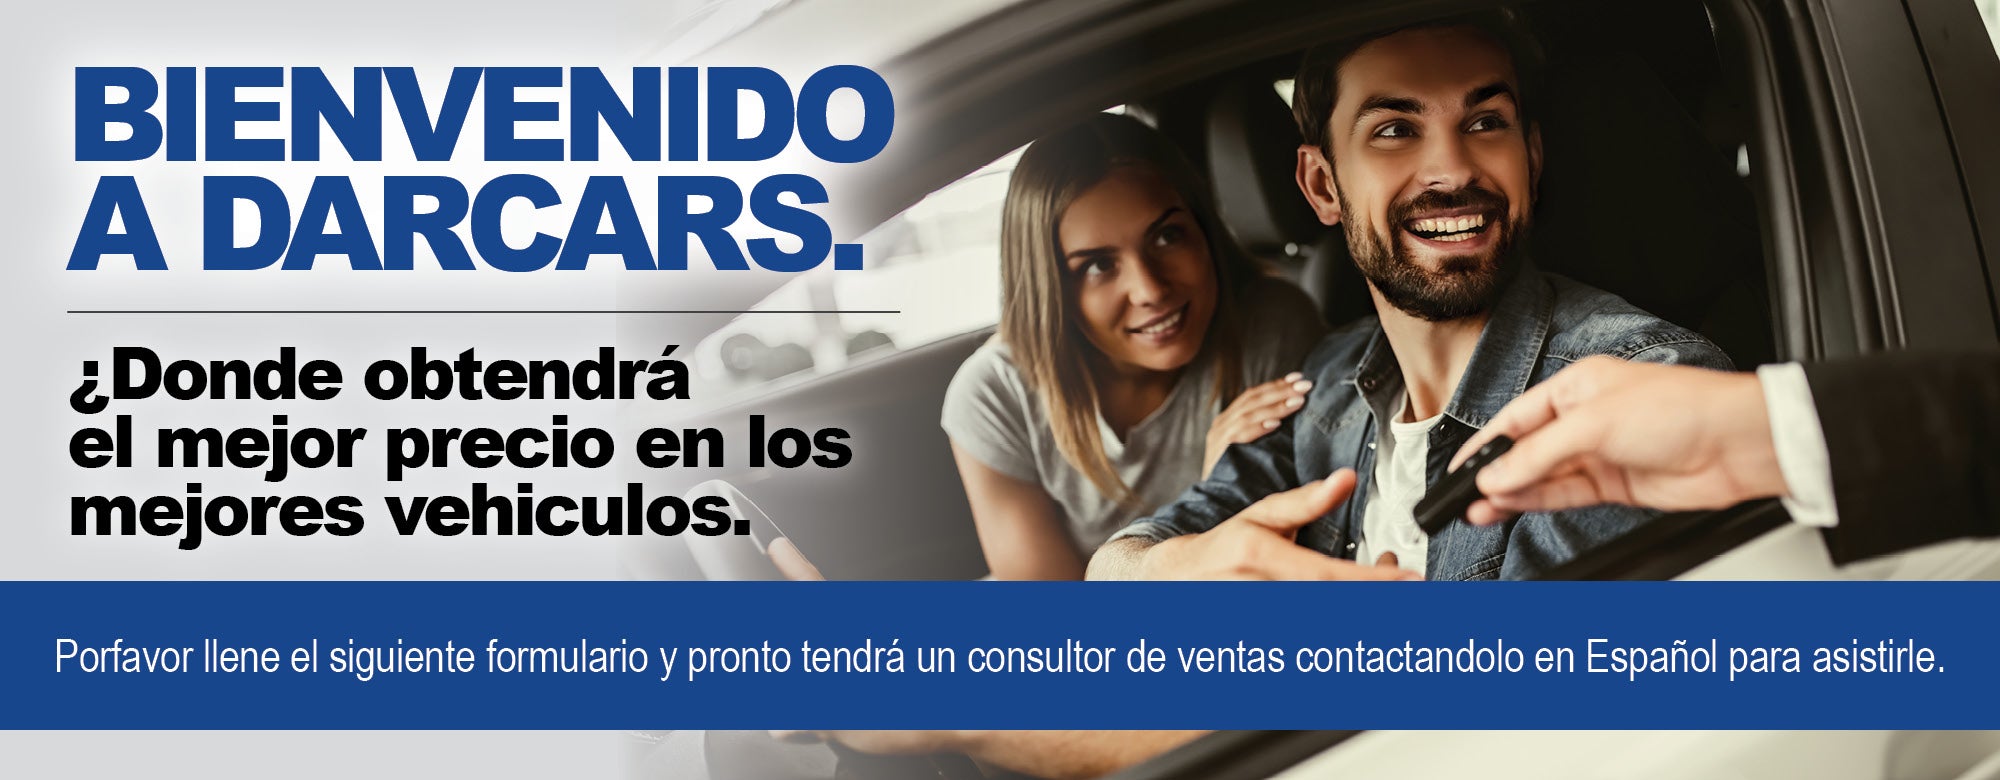 Se Habla Español | Dealer de Autos New Carrollton, MD | DARCARS ...